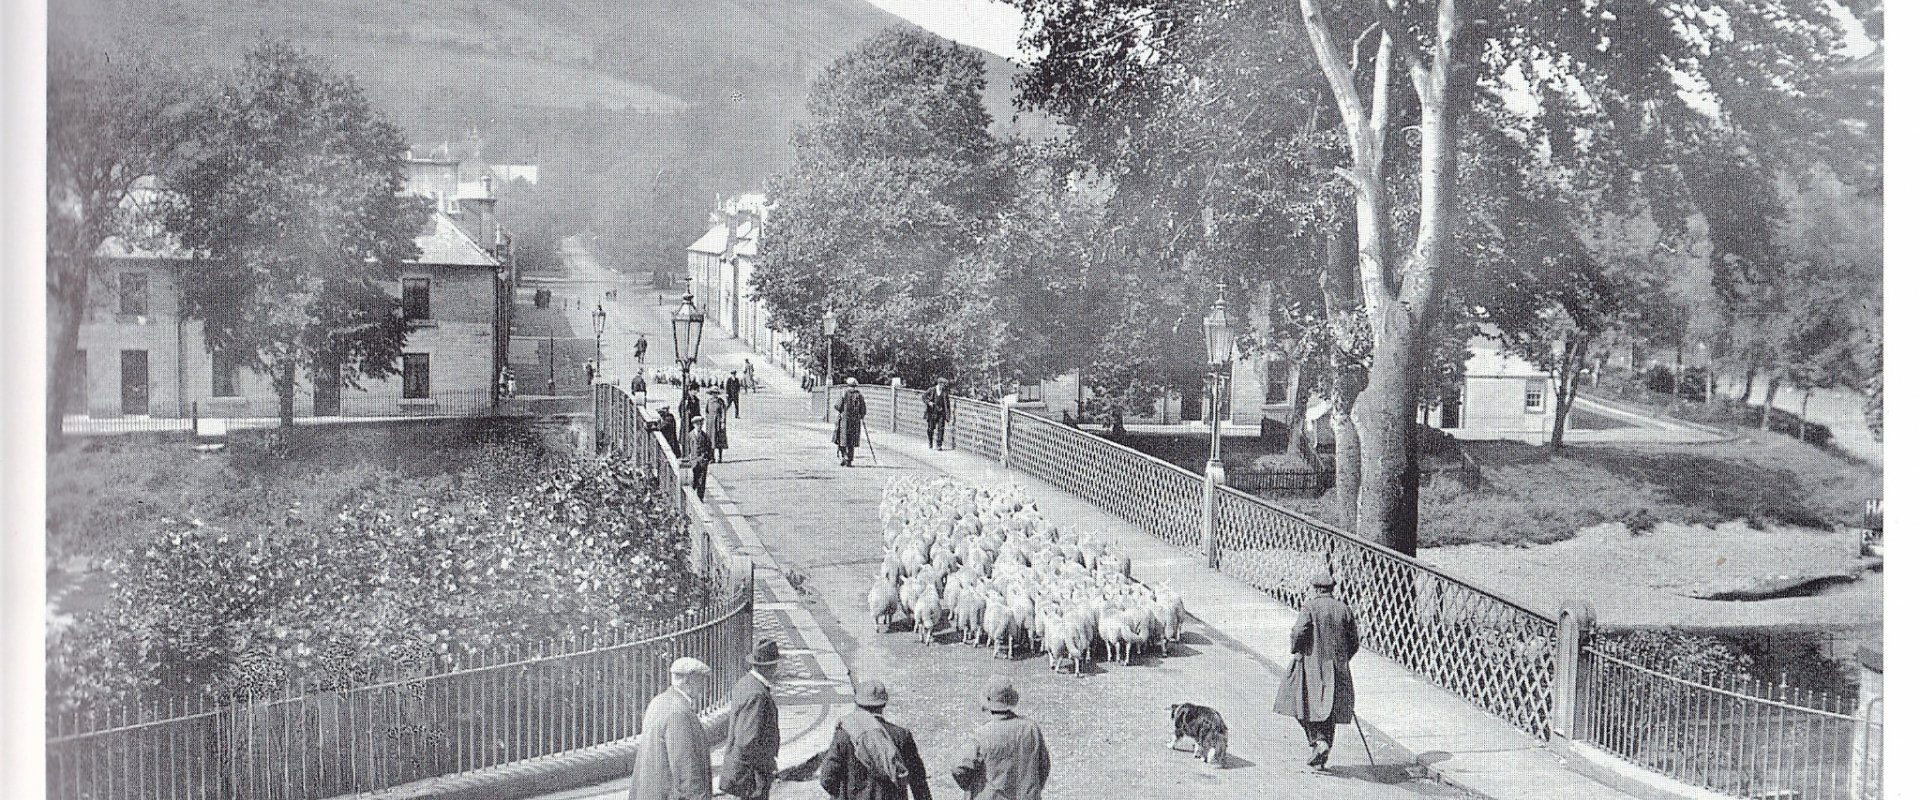 Sheep On Tt Bridge